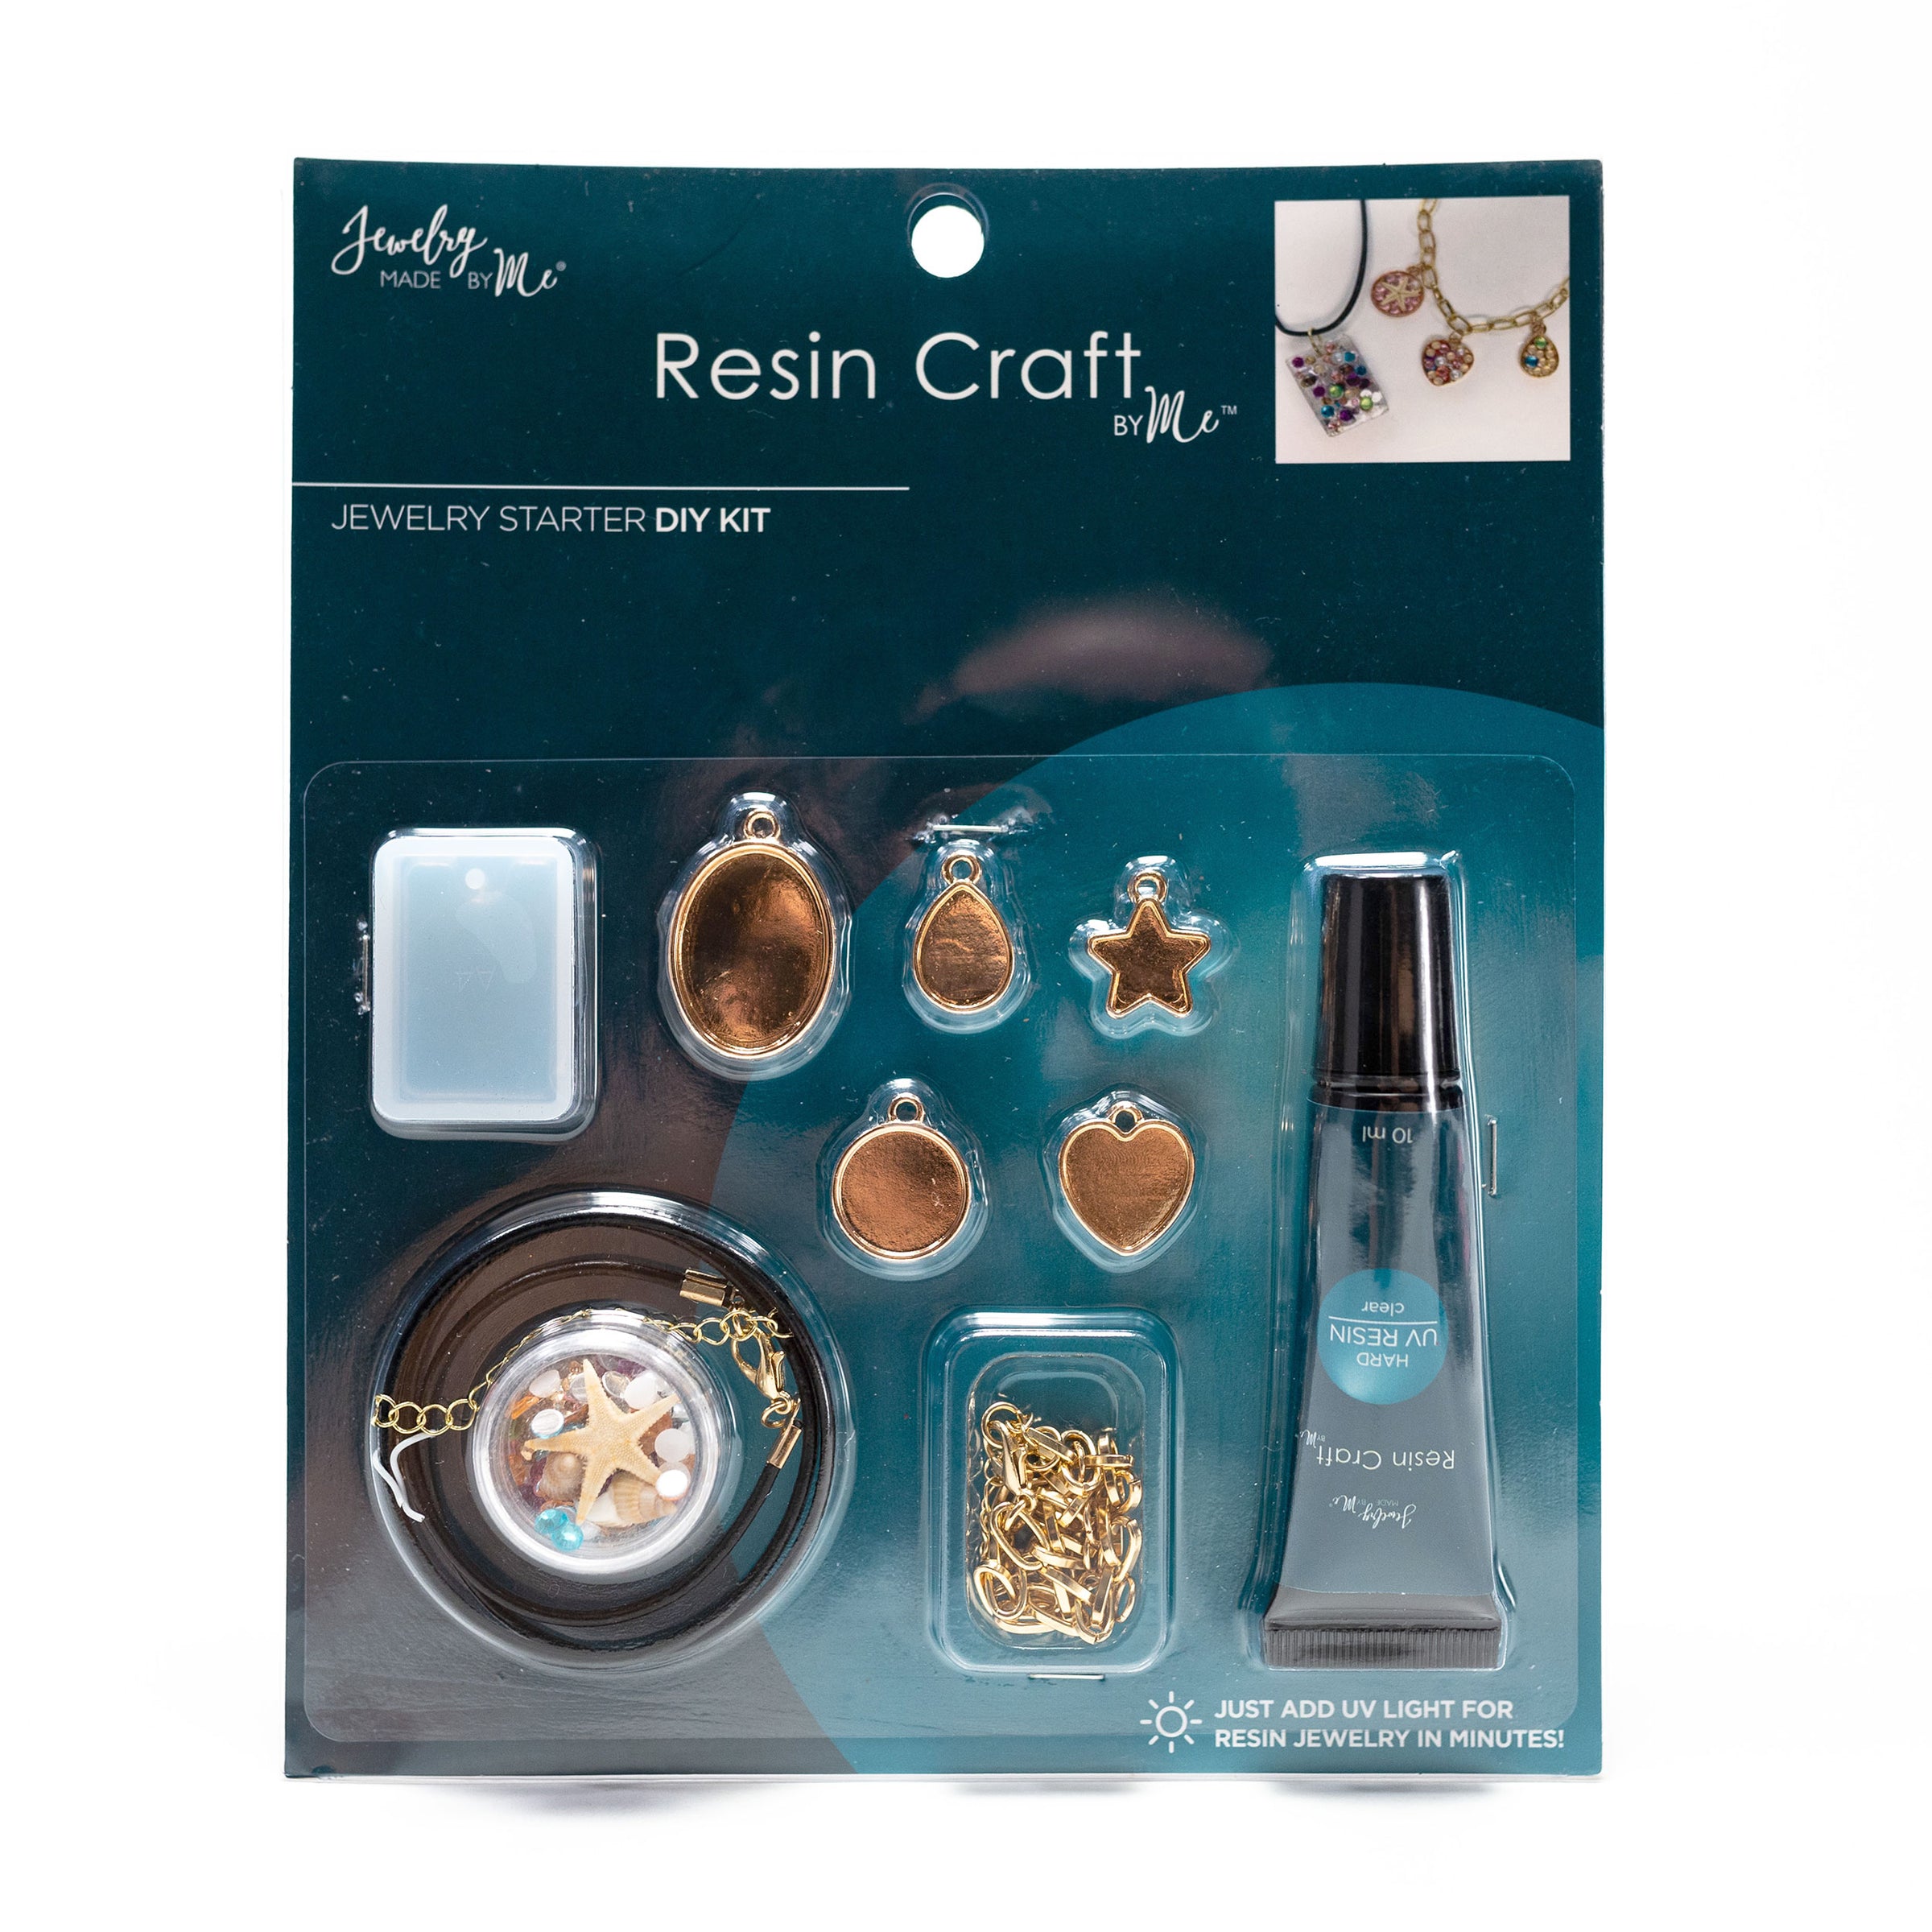 UV Resin Light  Resin Jewellery Supplies